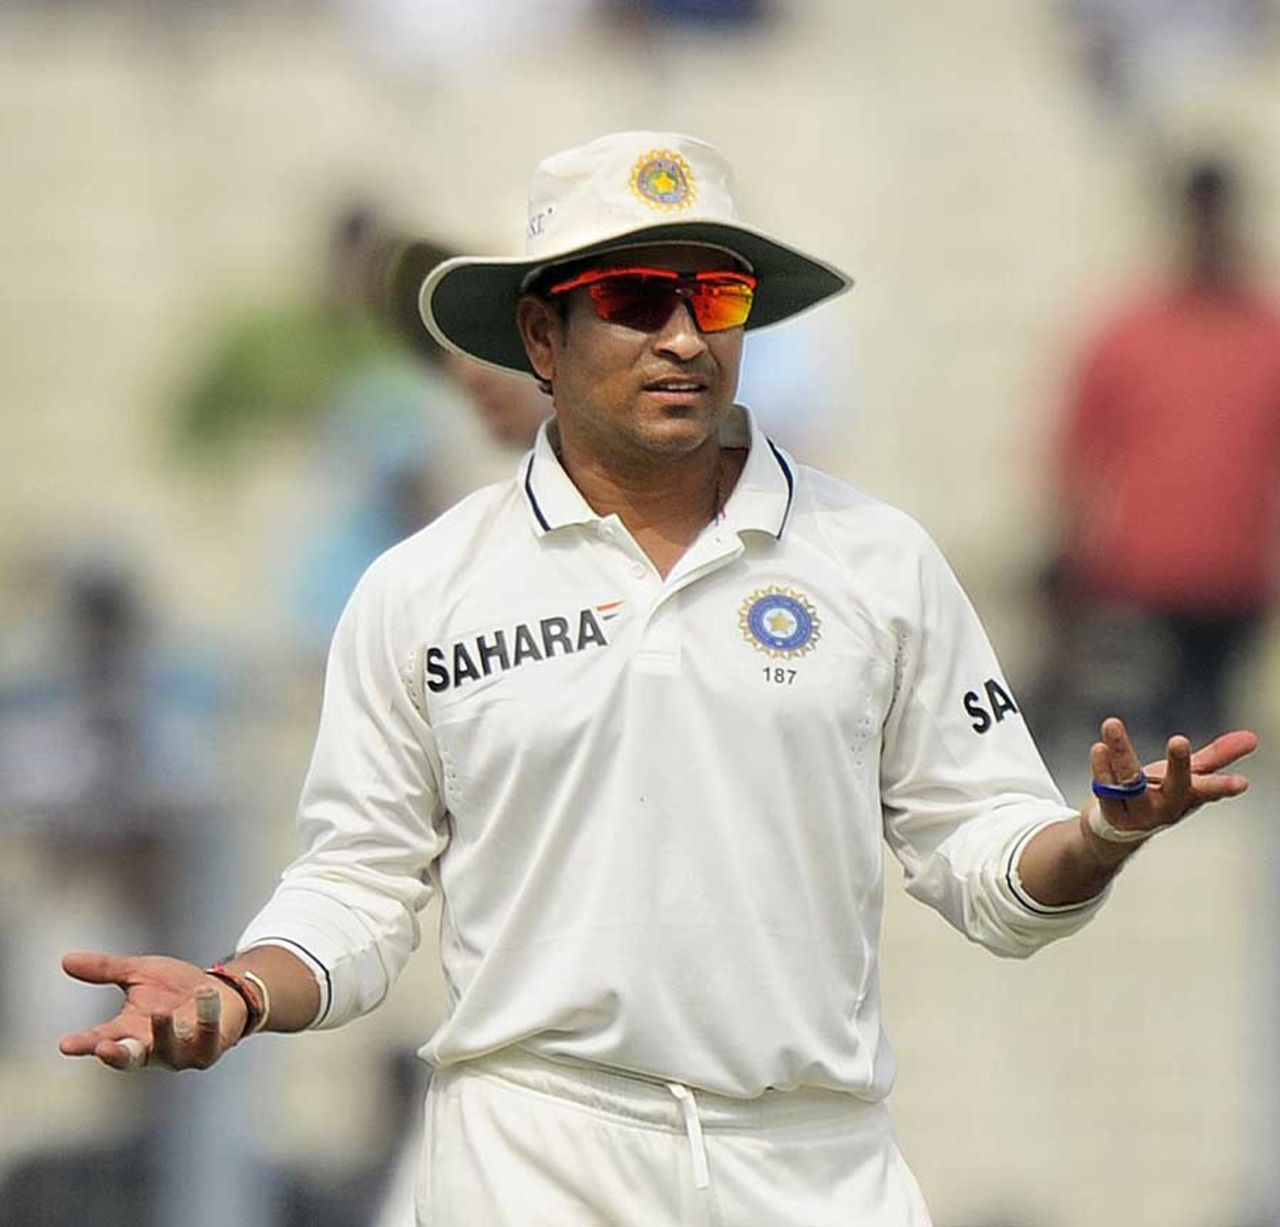 Sachin Tendulkar gestures during West Indies' second innings, India v West Indies, 2nd Test, Kolkata, 3rd day, November 16, 2011